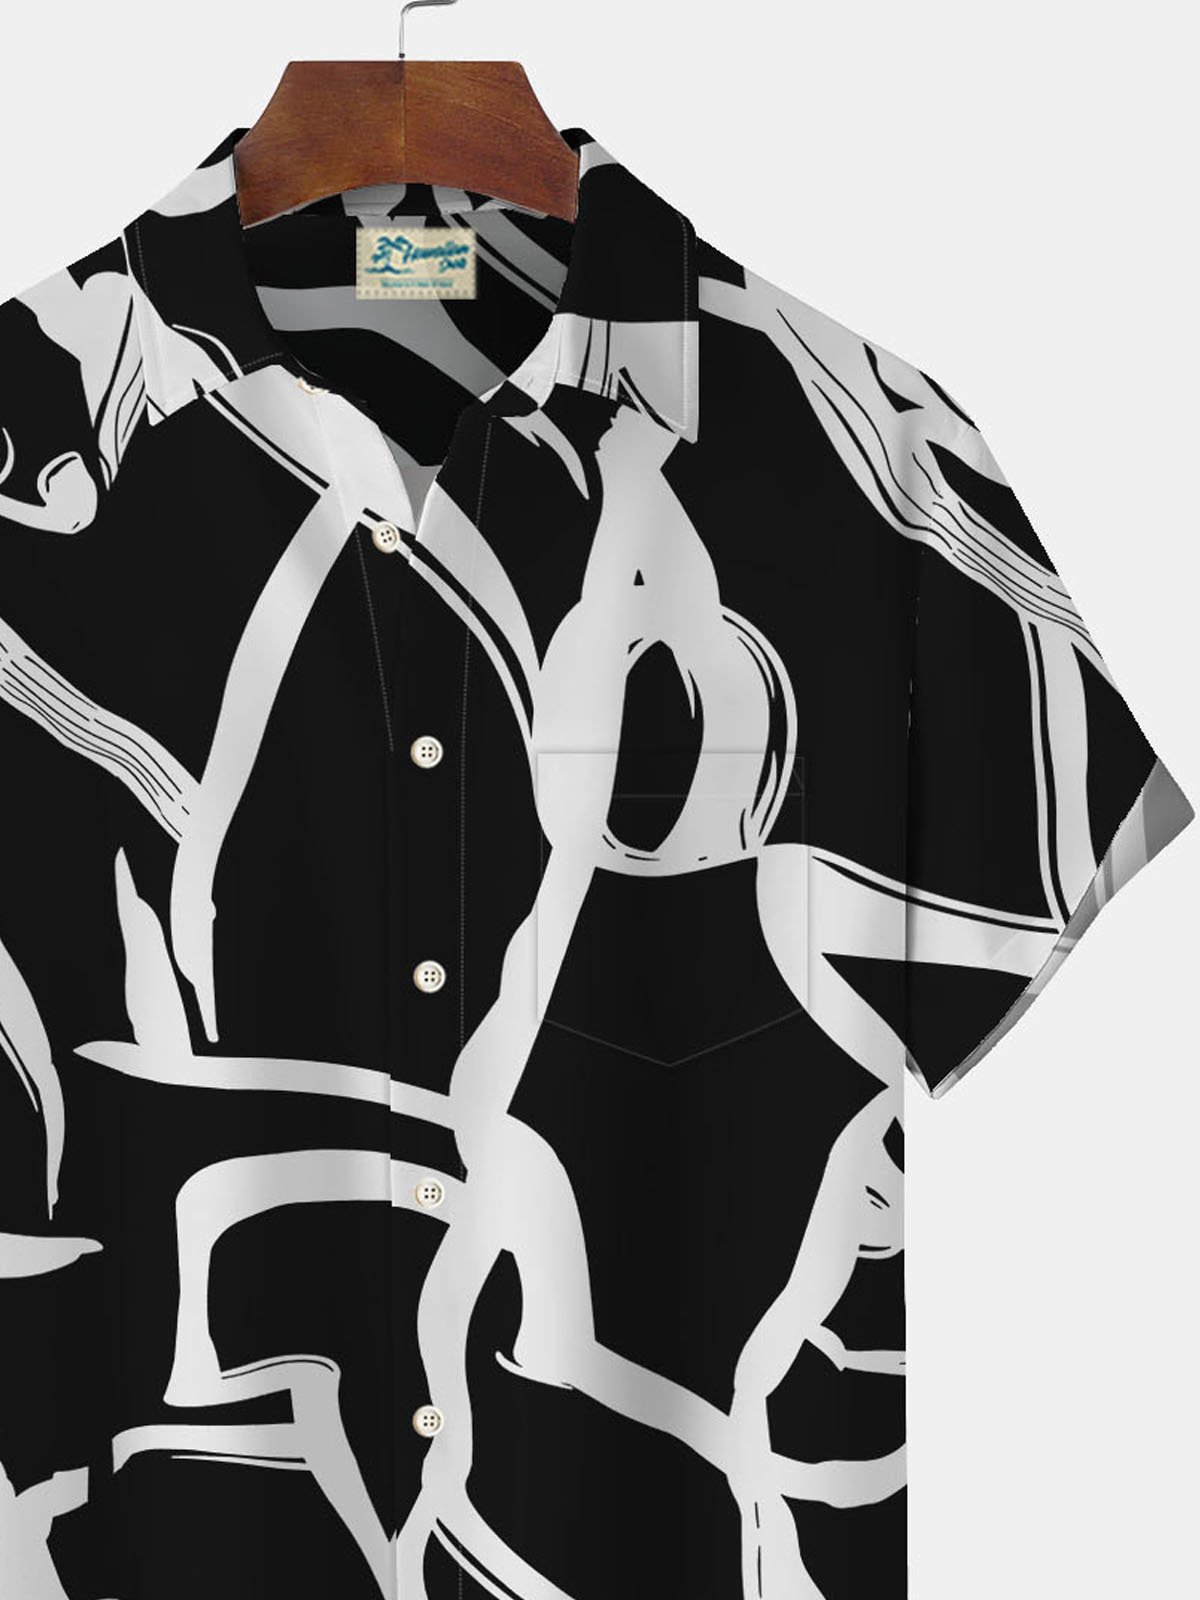 Royaura Geometric Ripple Textured Print Men's Button Pocket Shirt